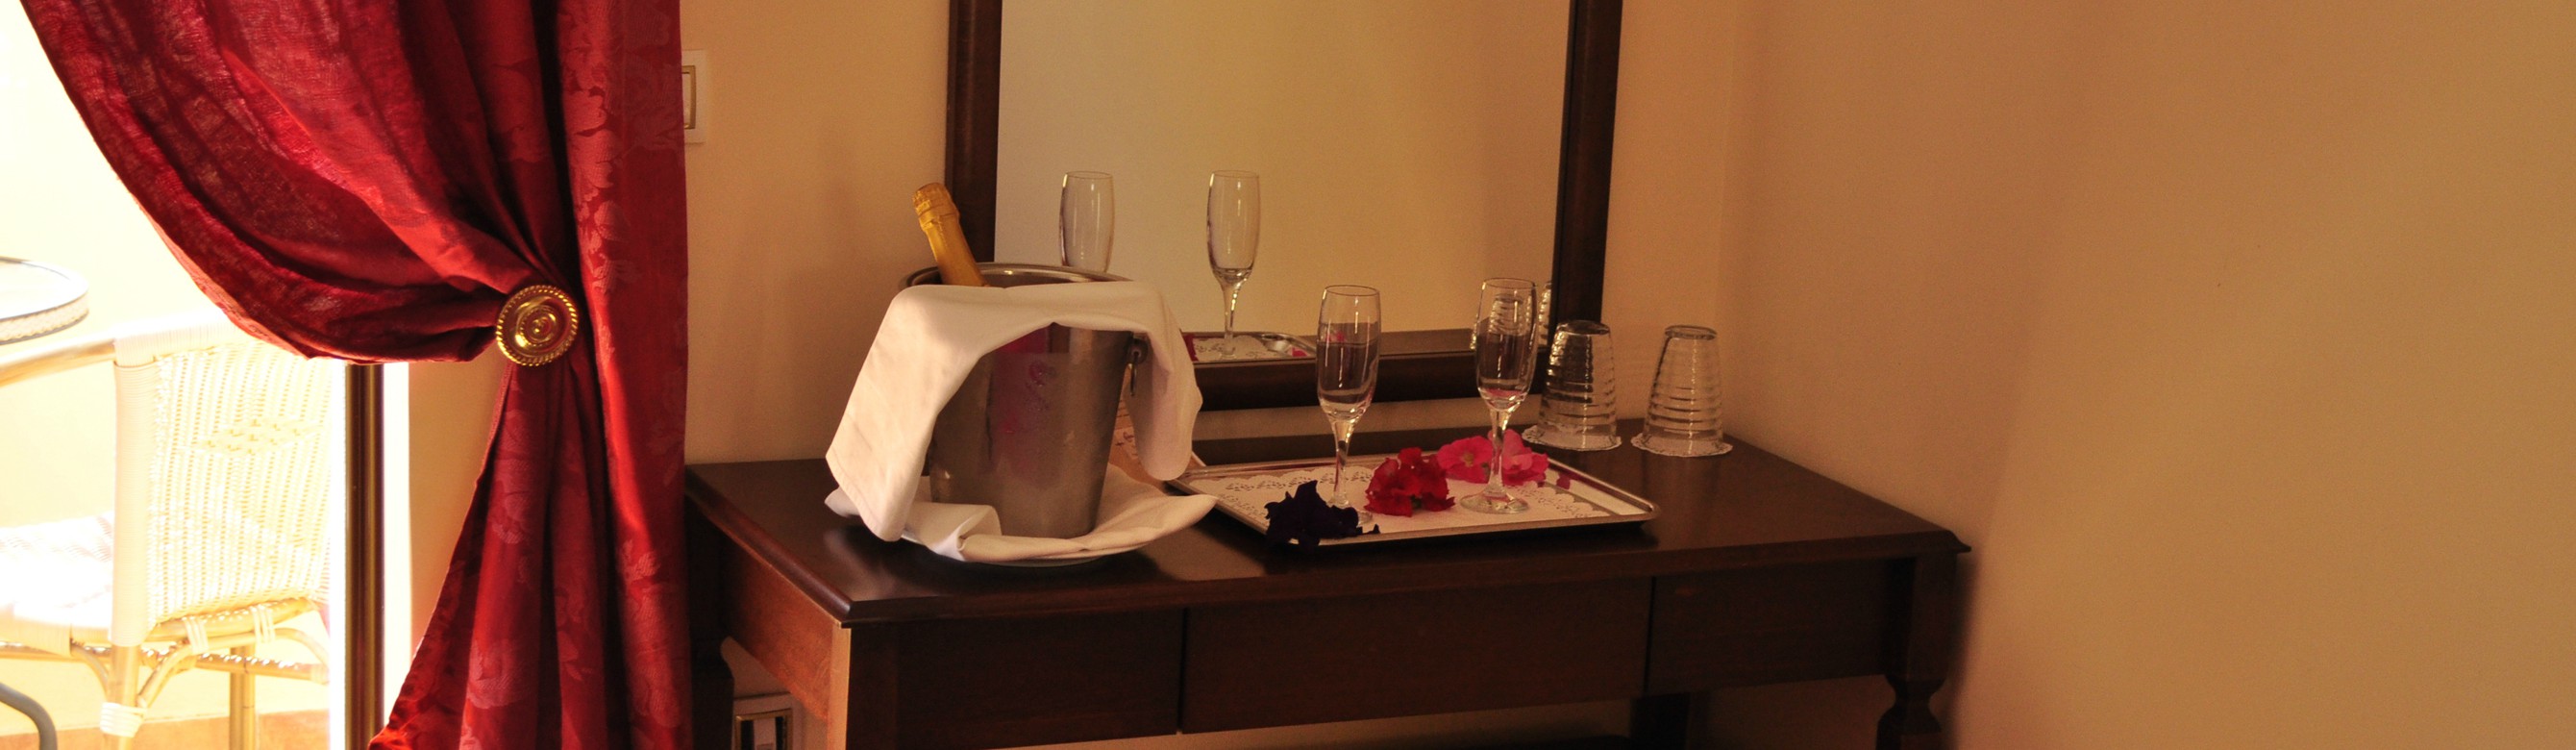 Book your wedding day in Corfu Secret Hotel Corfu